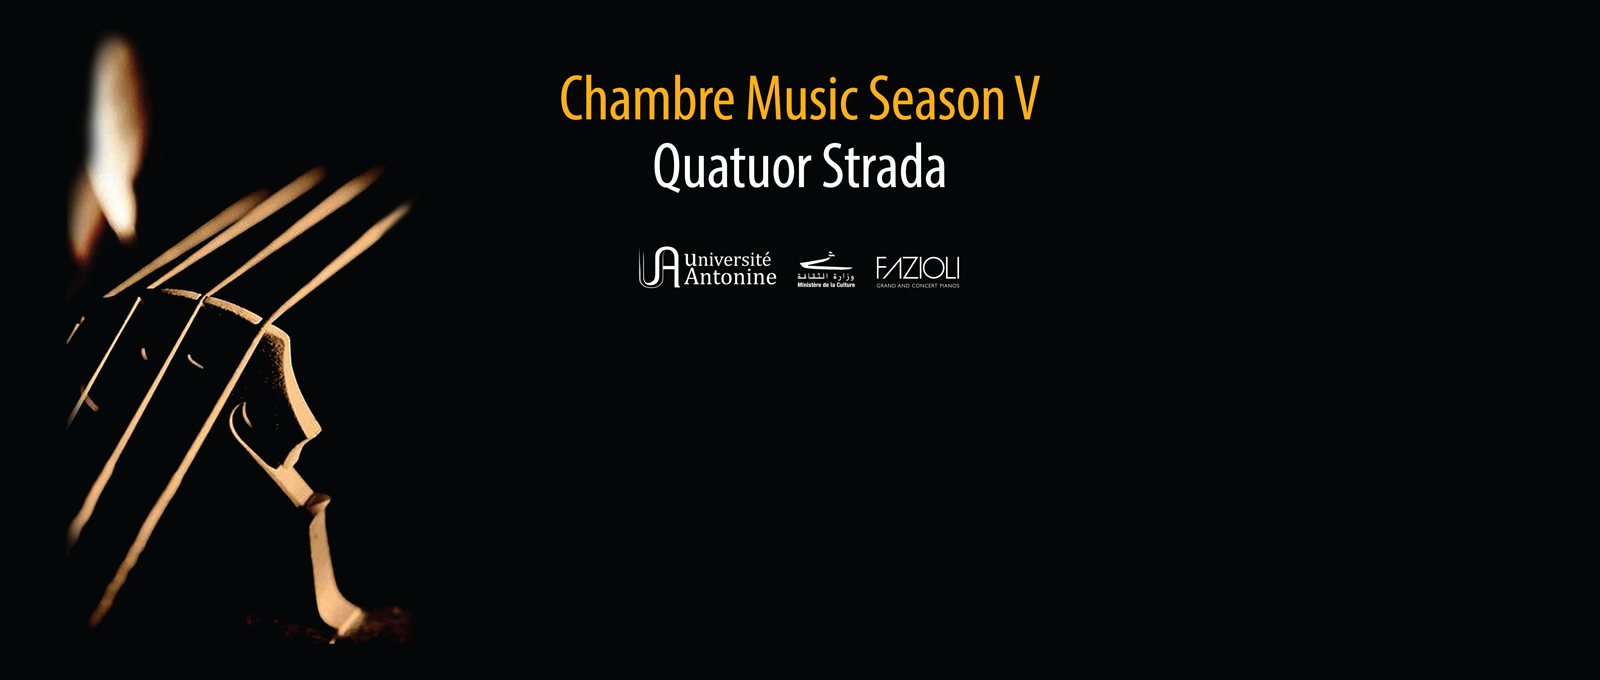 Chamber Music Season V | Quatuor Strada